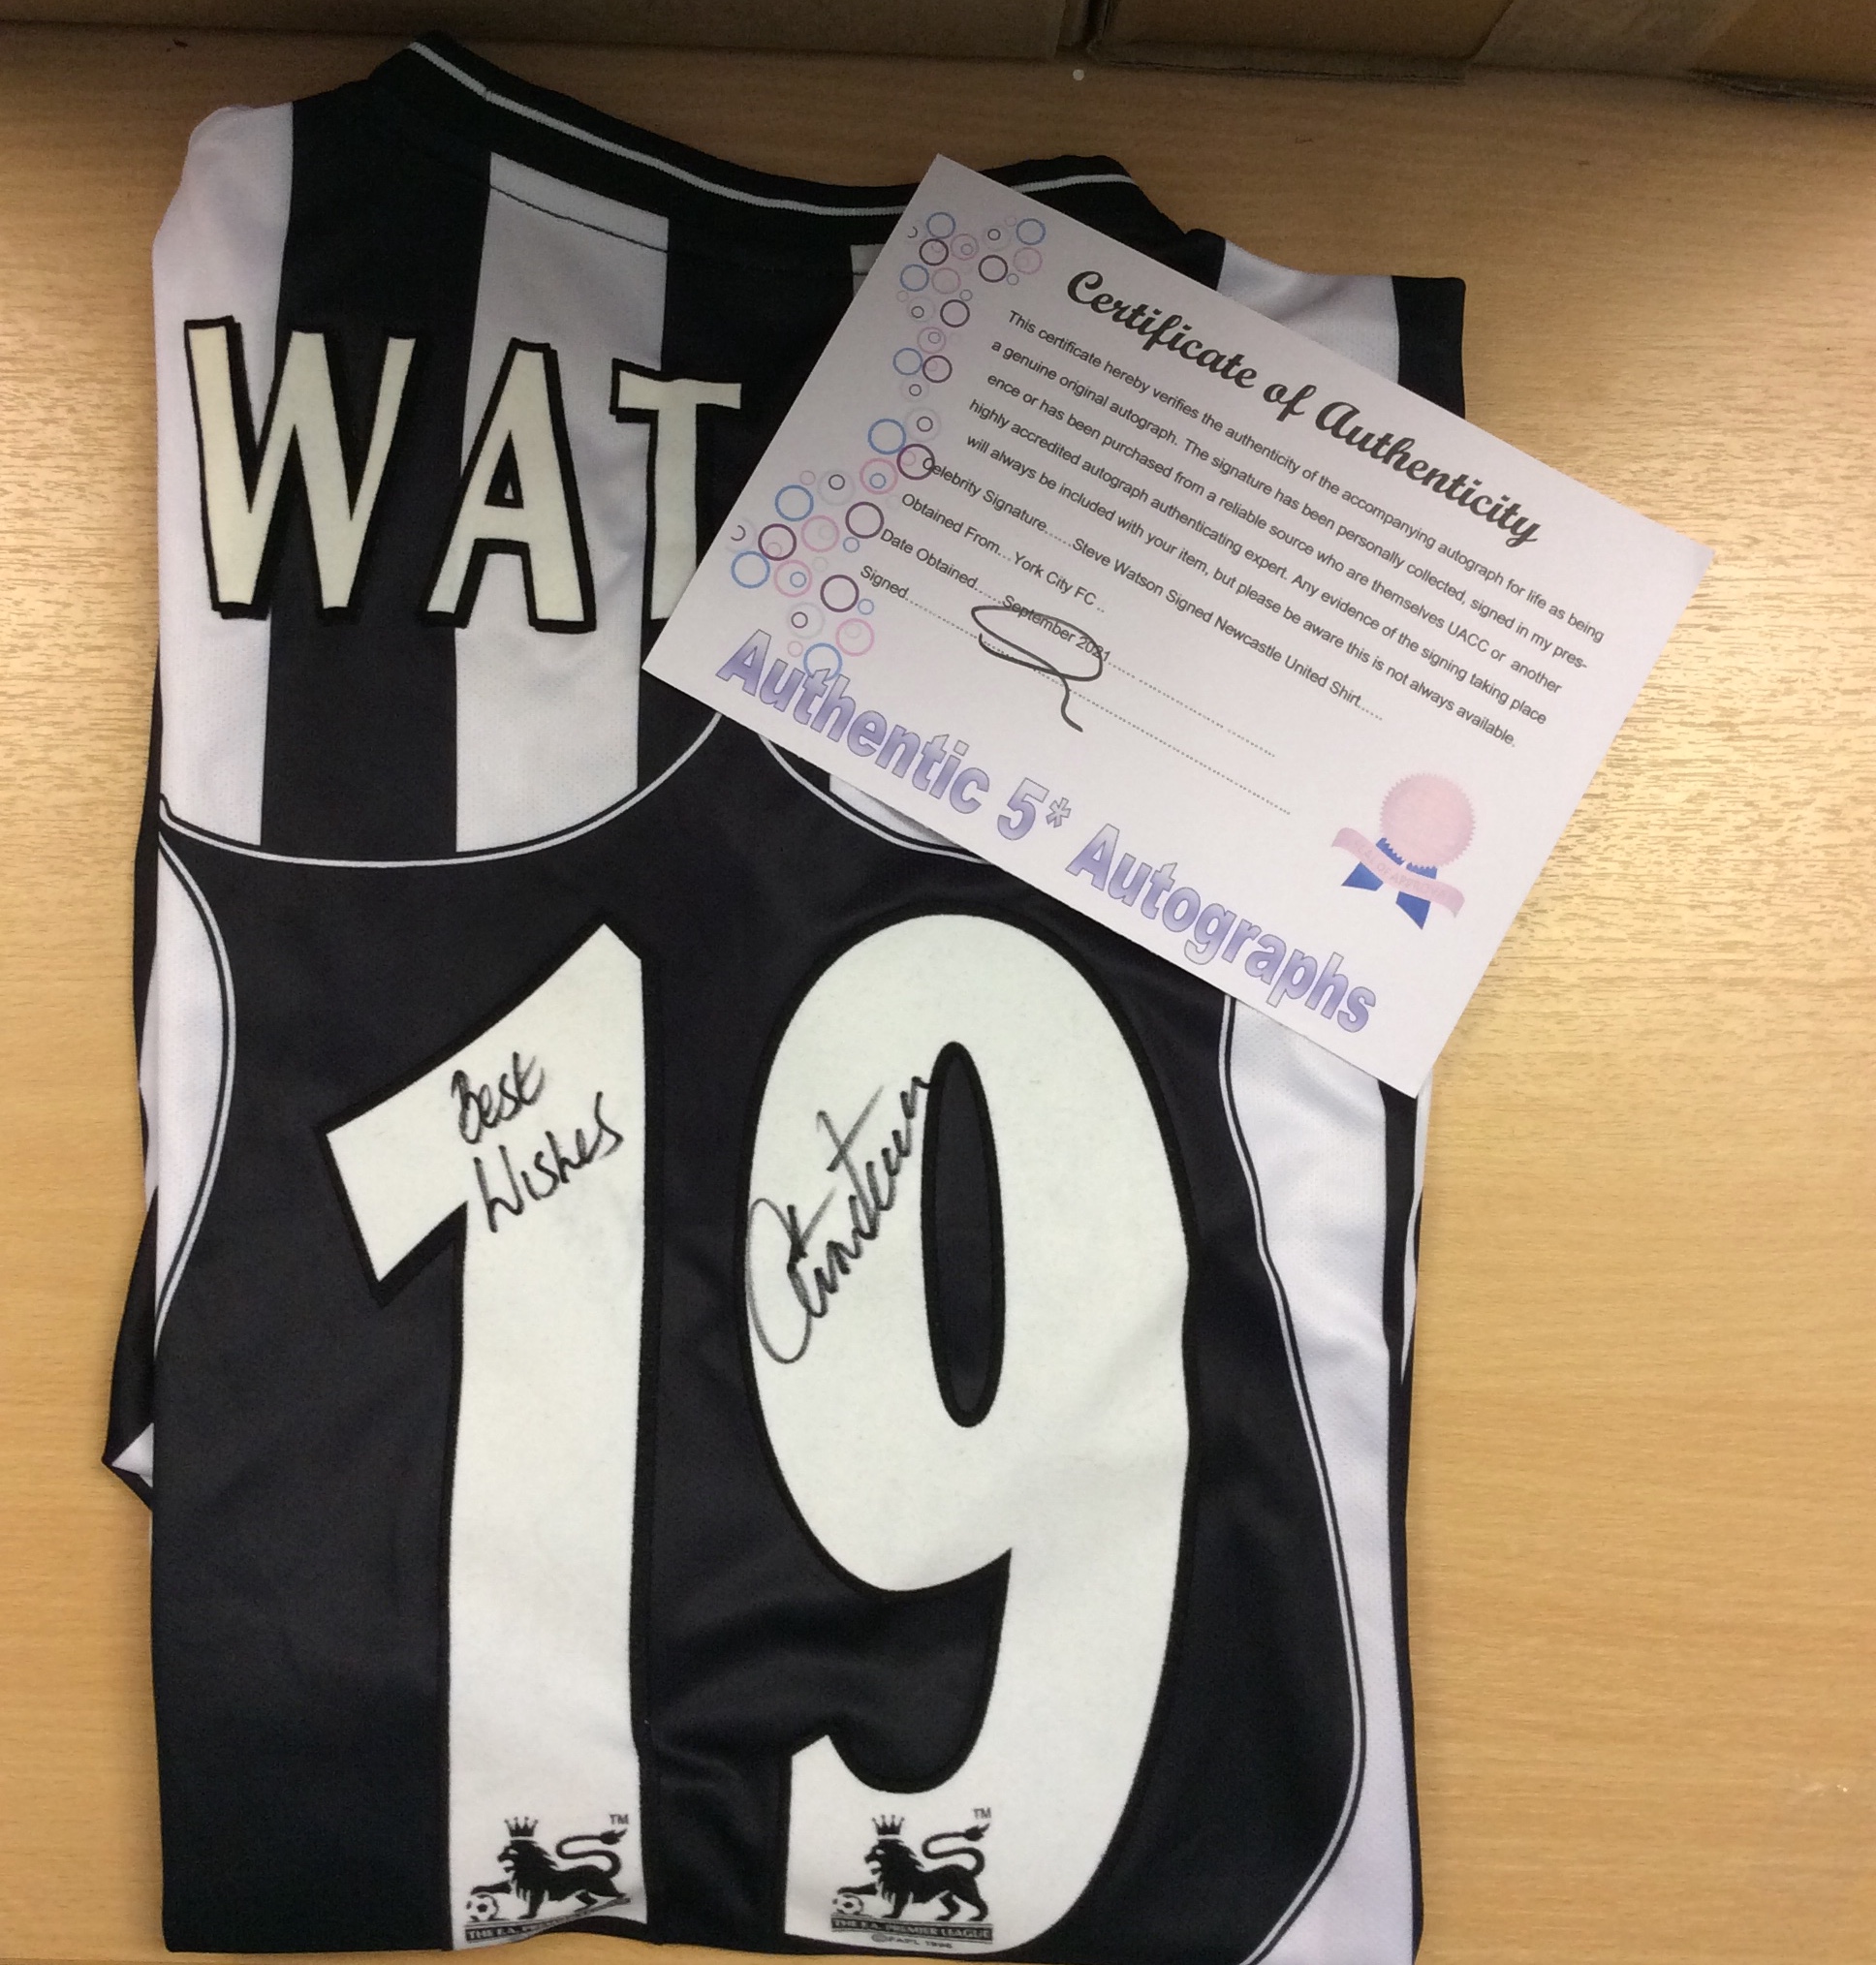 Steve Watson Signed Newcastle Shirt - Image 2 of 2